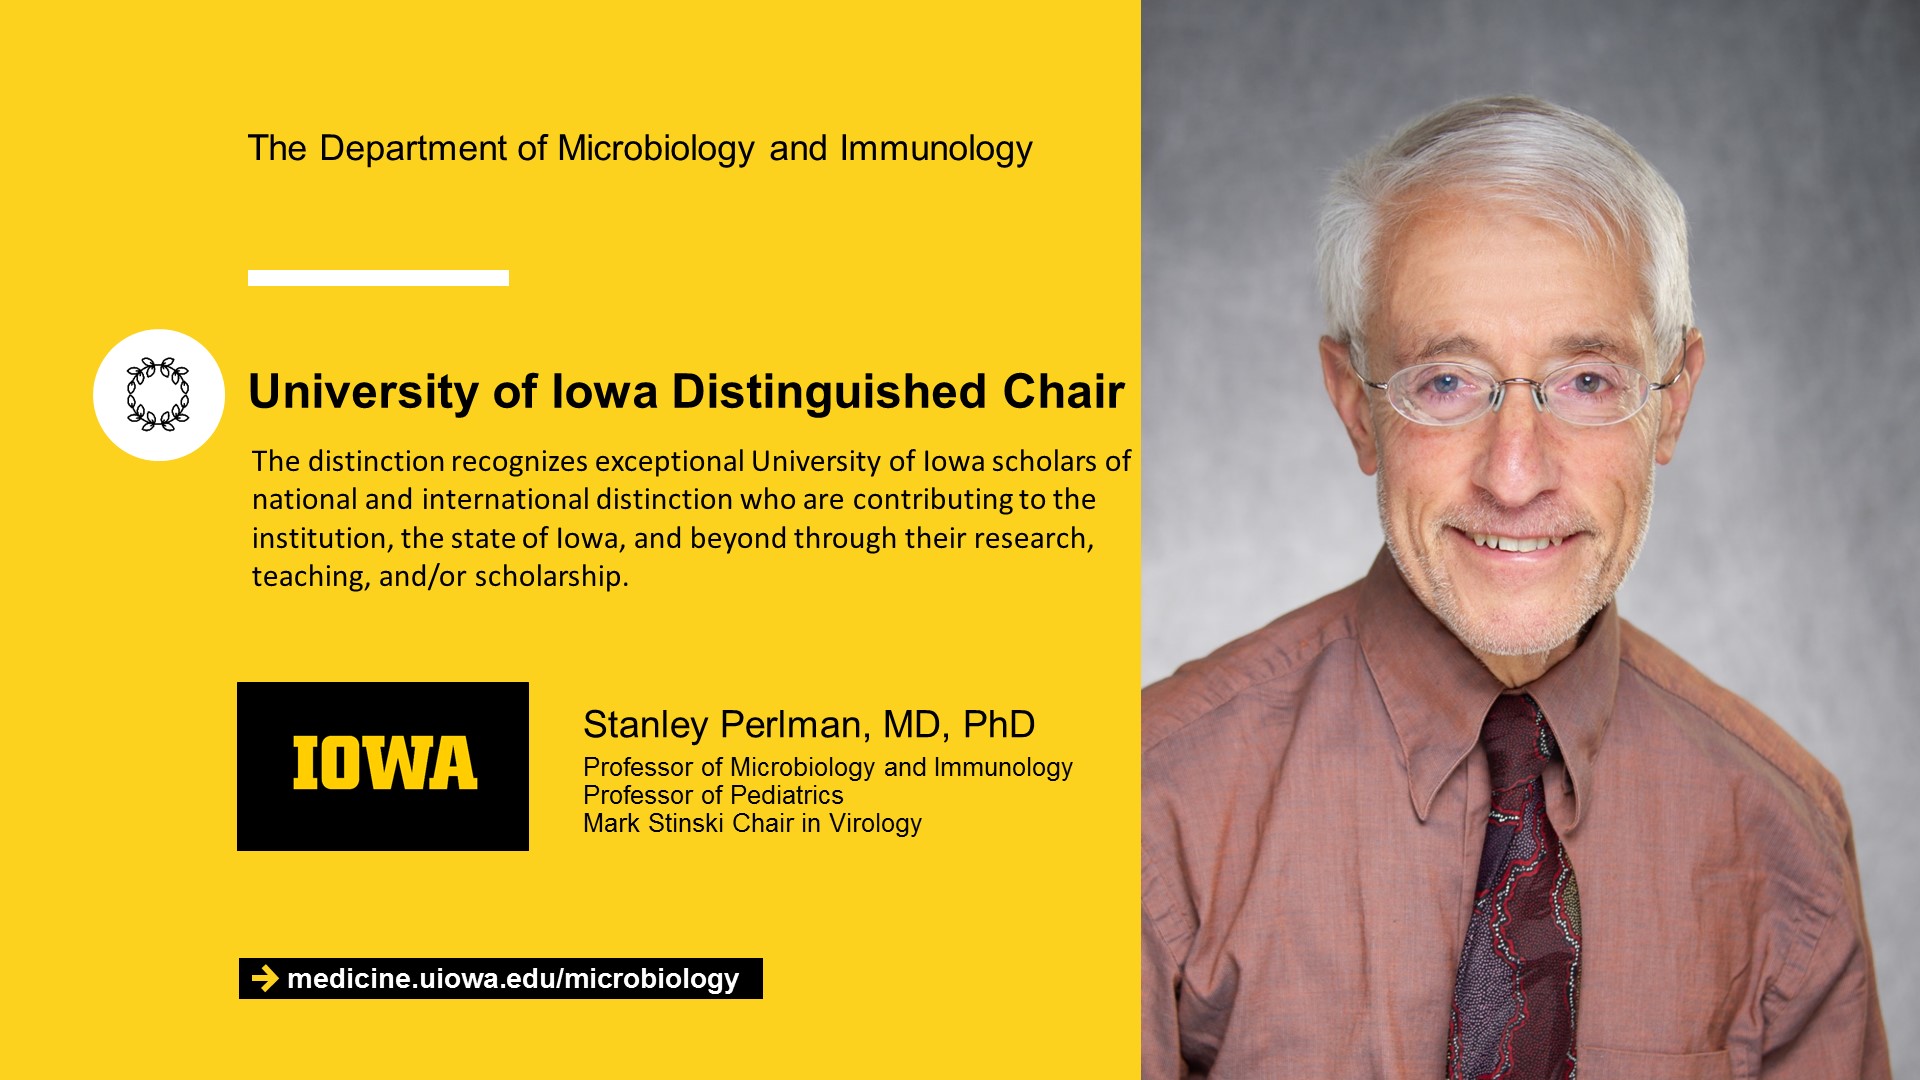  University Distinguished Chair - Dr. Stanley Perlman